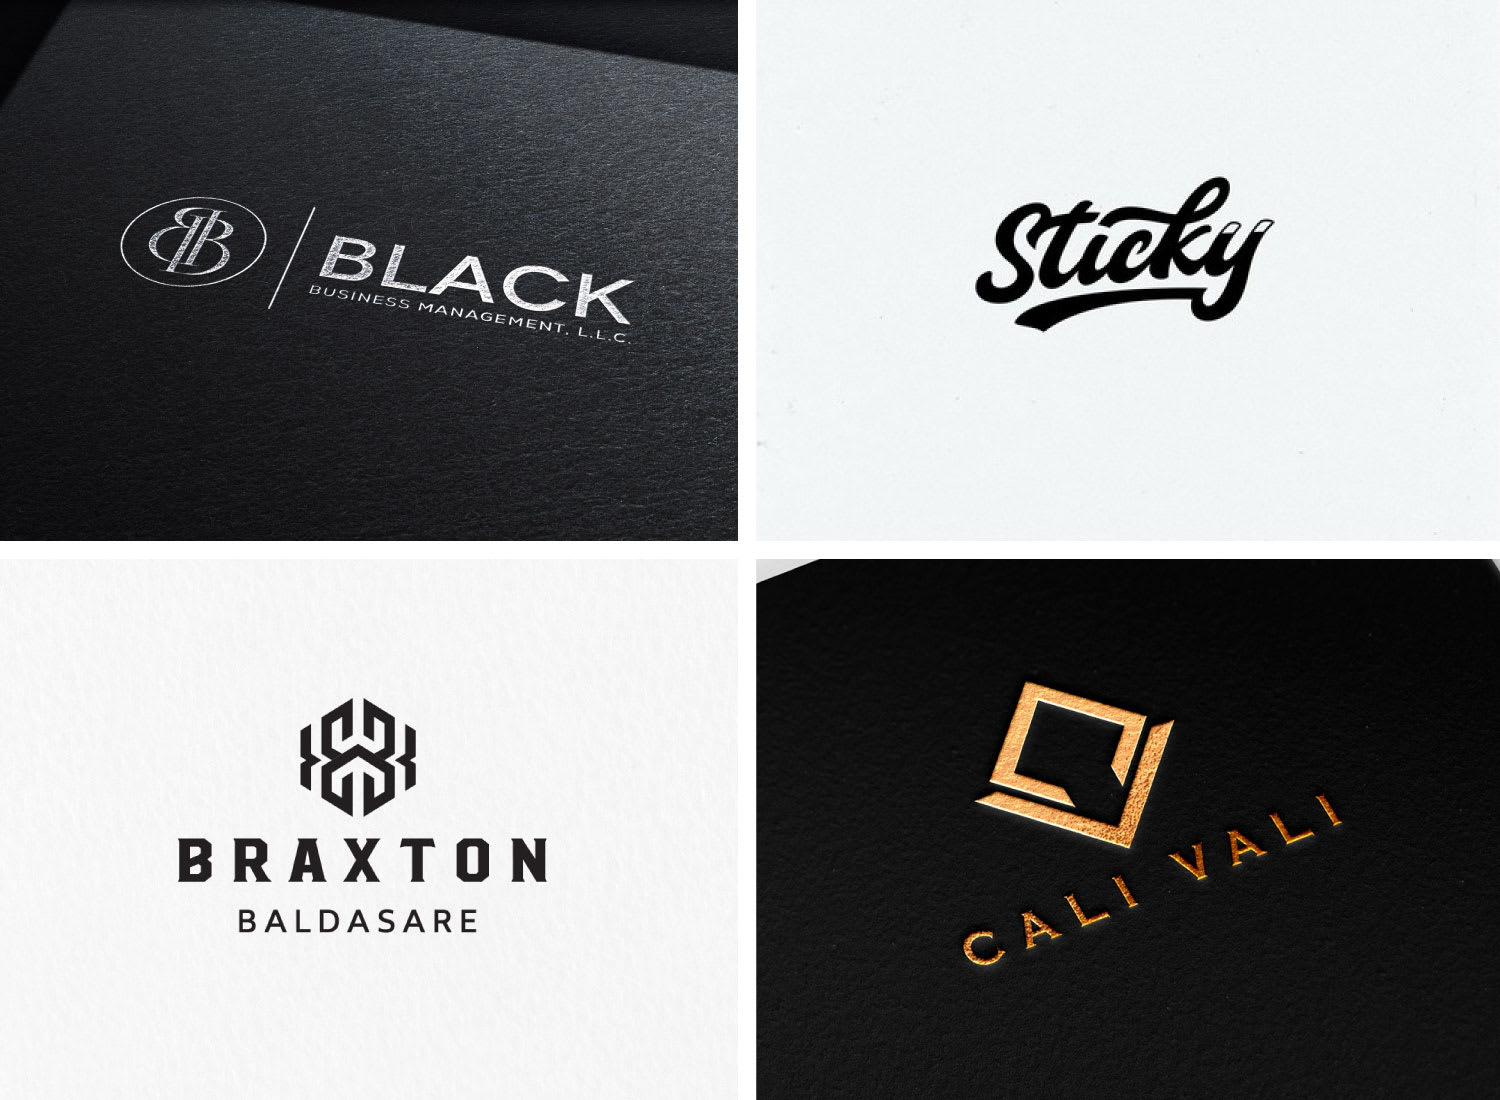 Logo Luxury Clothing Brands Black Logo Stock Vector (Royalty Free)  2305729017